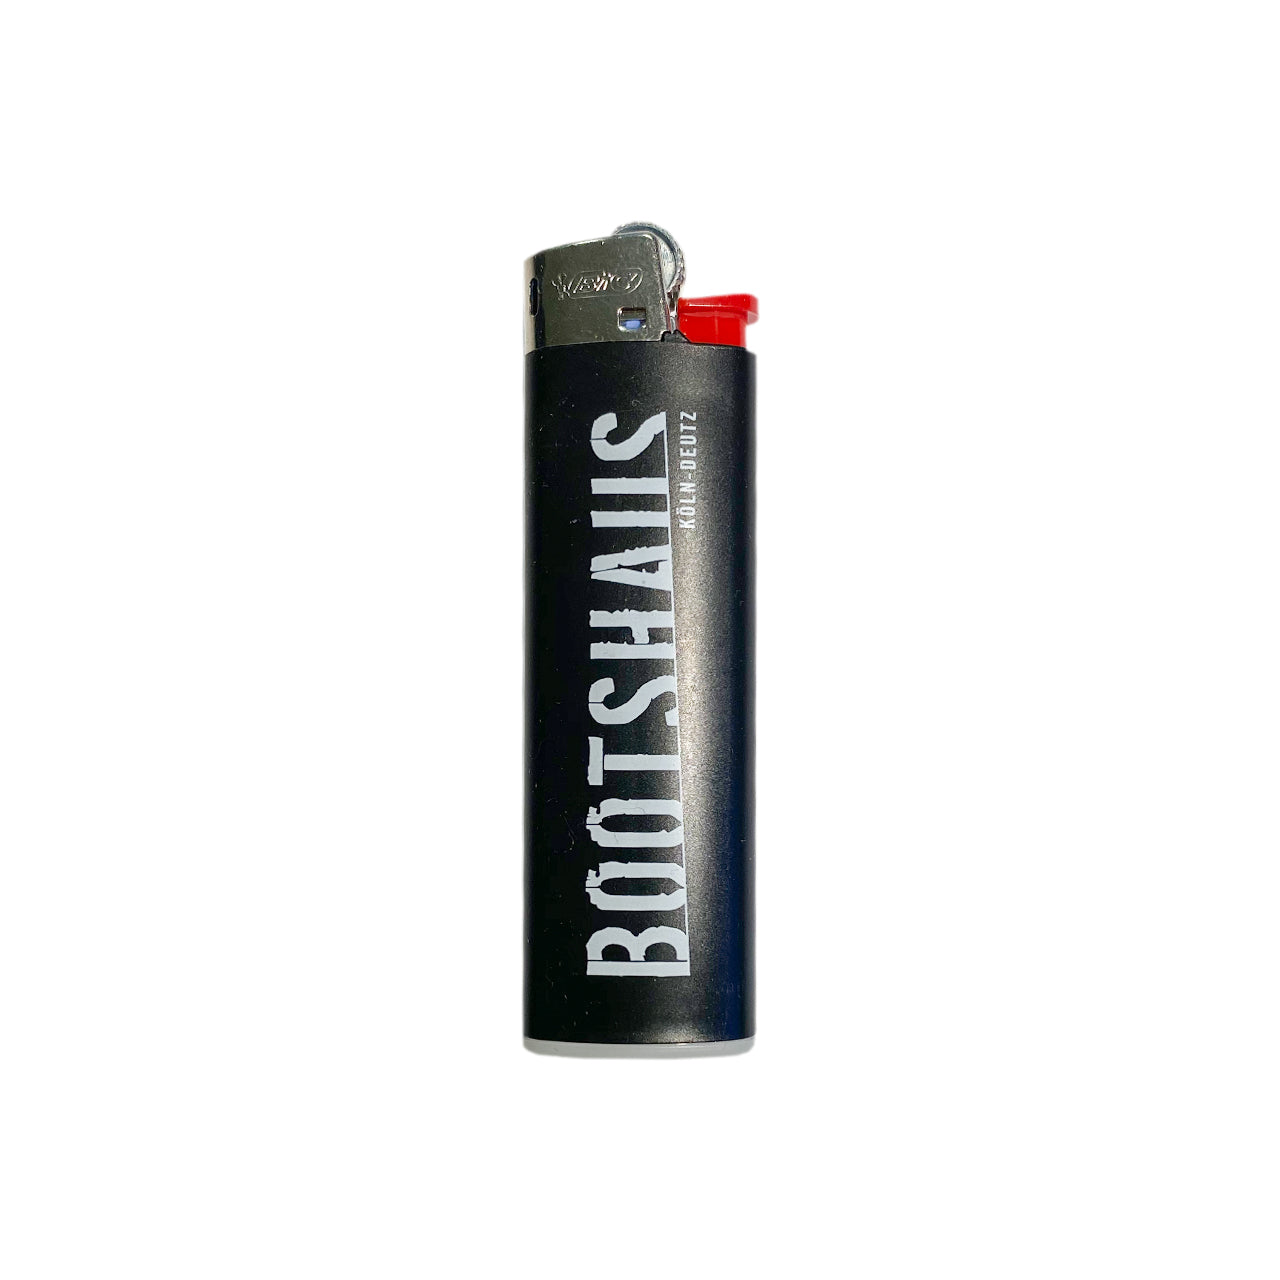 Bootshaus - Lighter